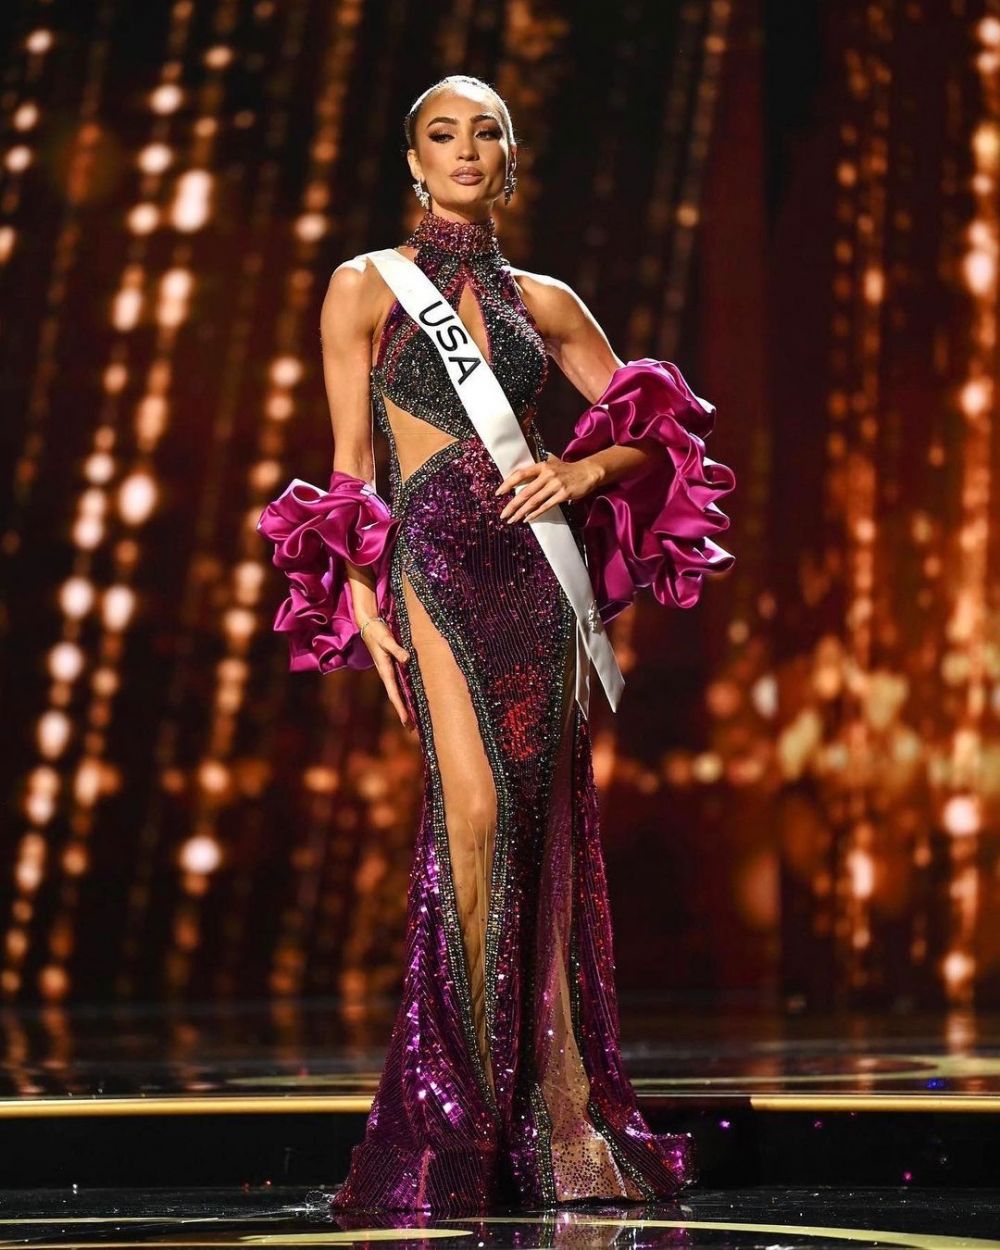 Jadi Miss Universe 2022, intip 11 pesona R'Bonney Nola wakil USA yang berdarah Filipina